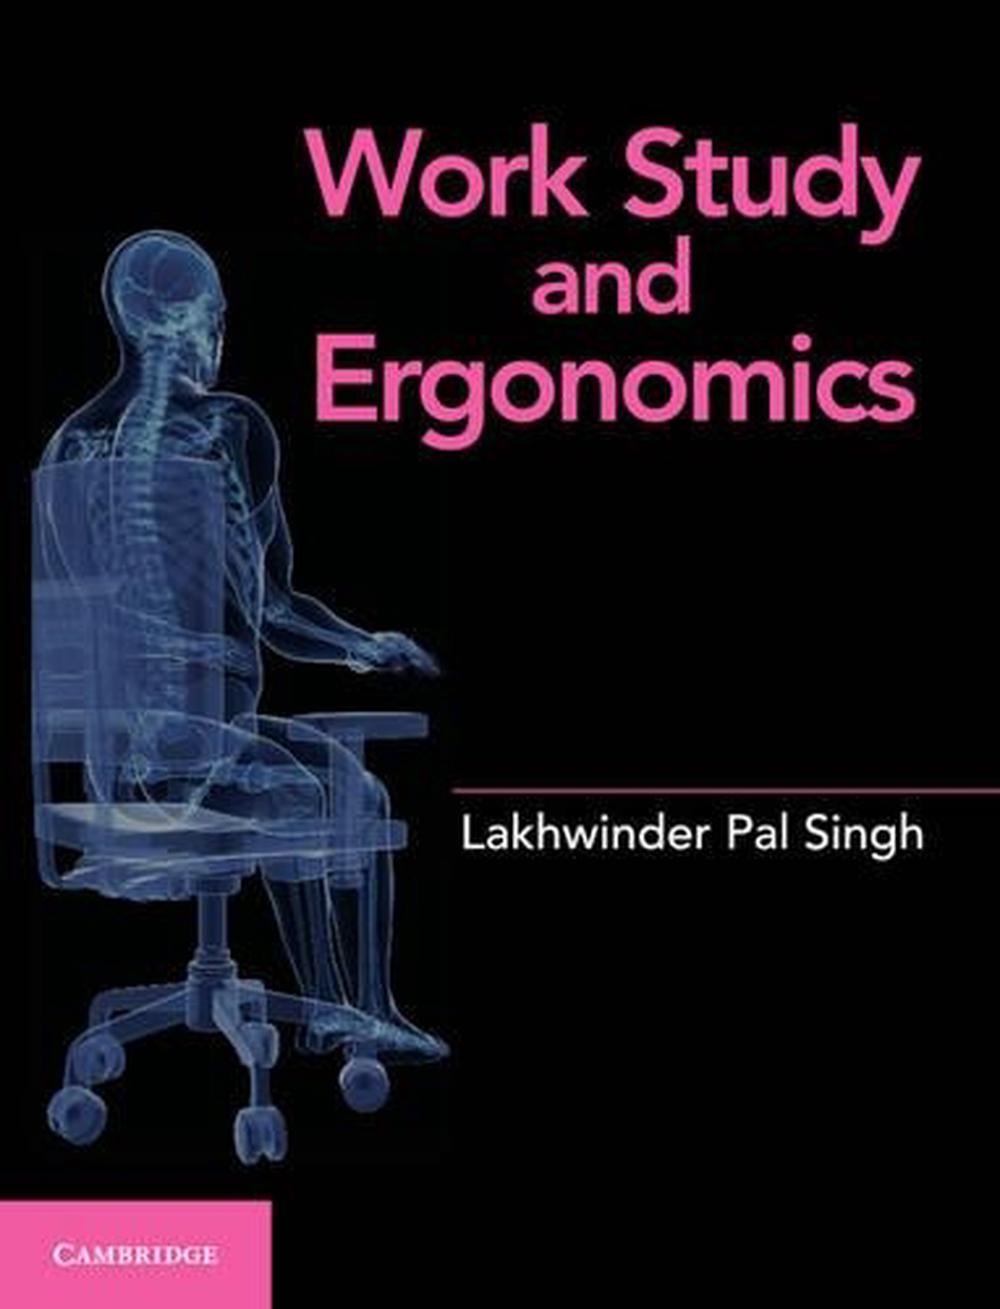 Work Study And Ergonomics By Lakhwinder Pal Singh English Paperback